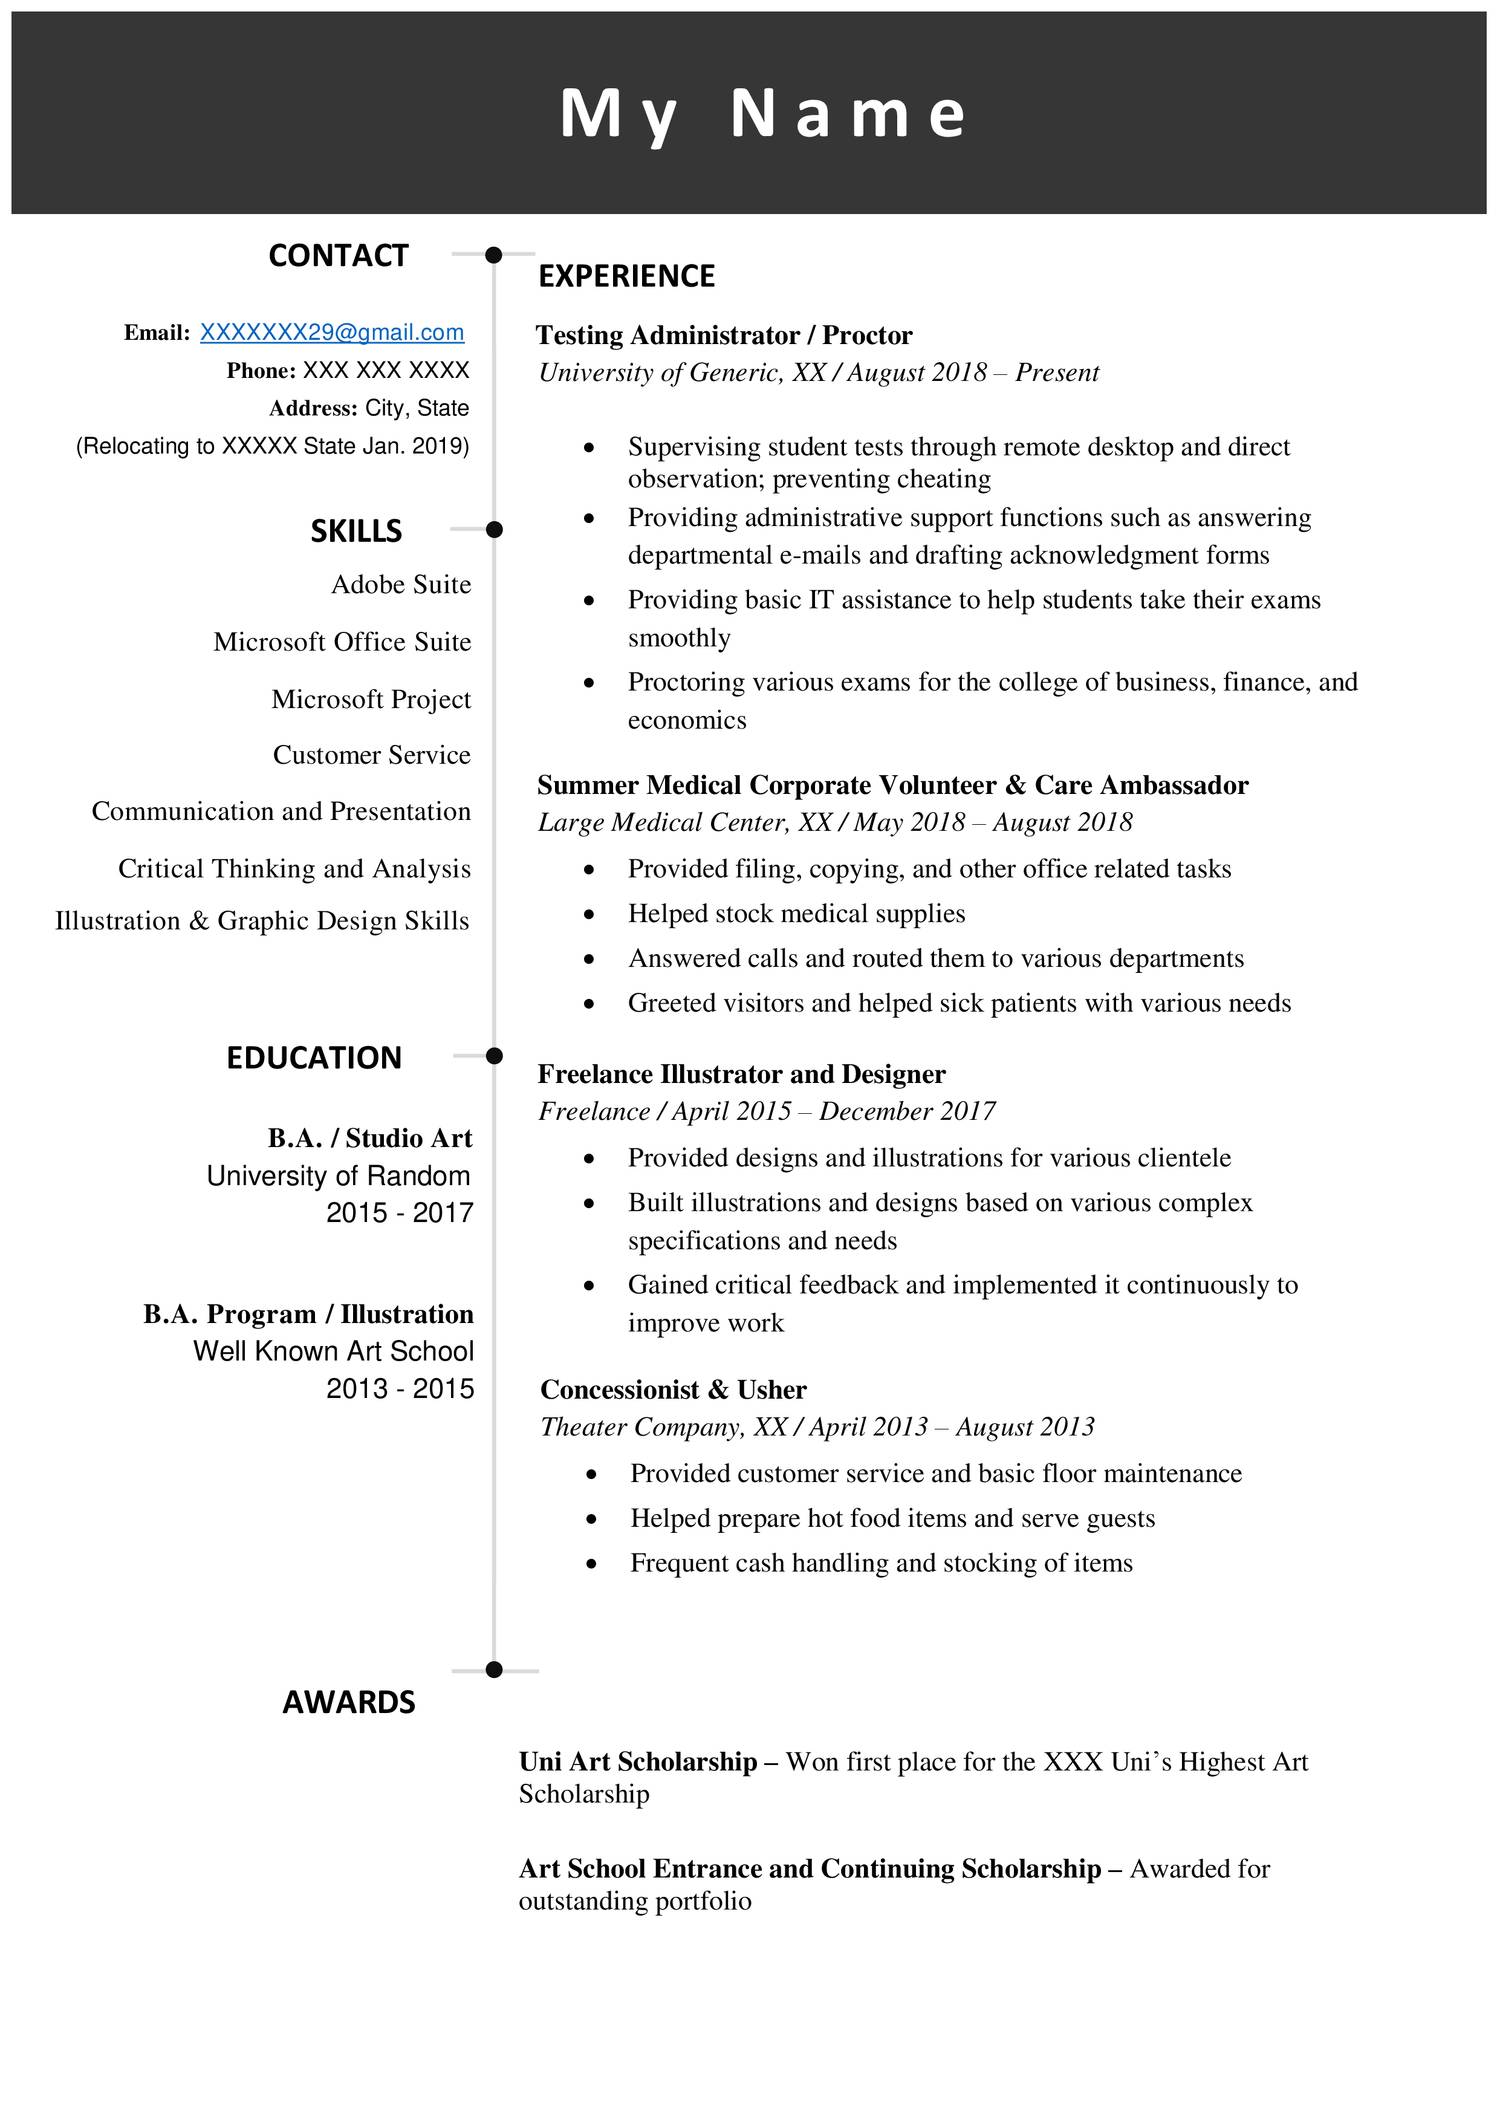 Meme Resume Test.pdf | DocDroid